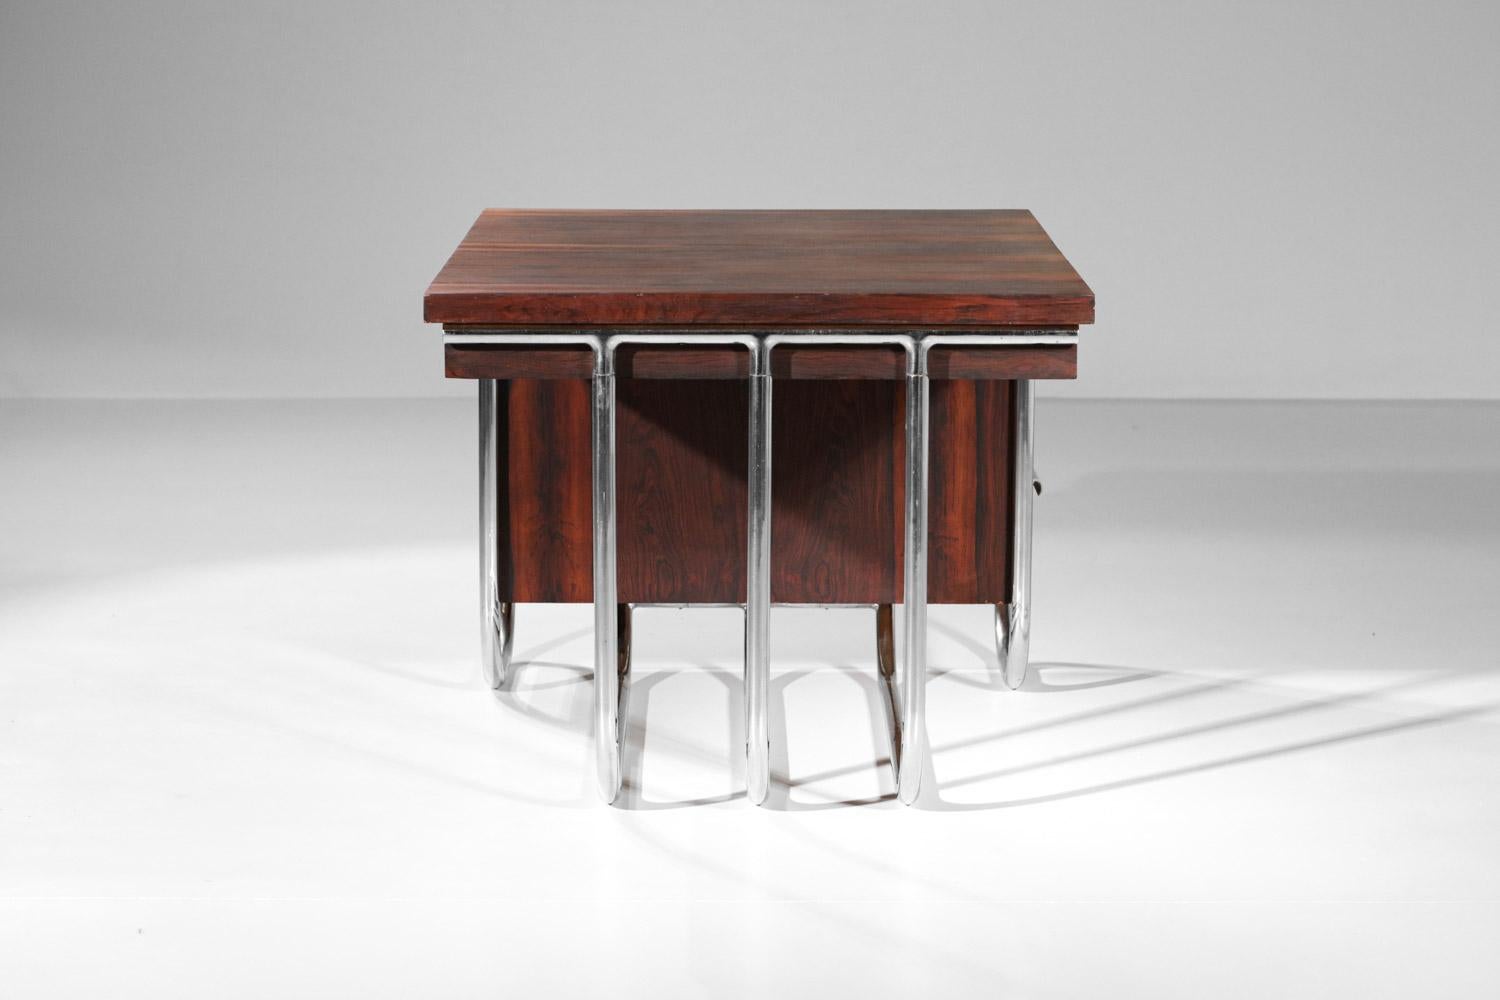 Modernist Desk in Solid Wood 40s / 50s Bauhaus Style Vintage For Sale 8